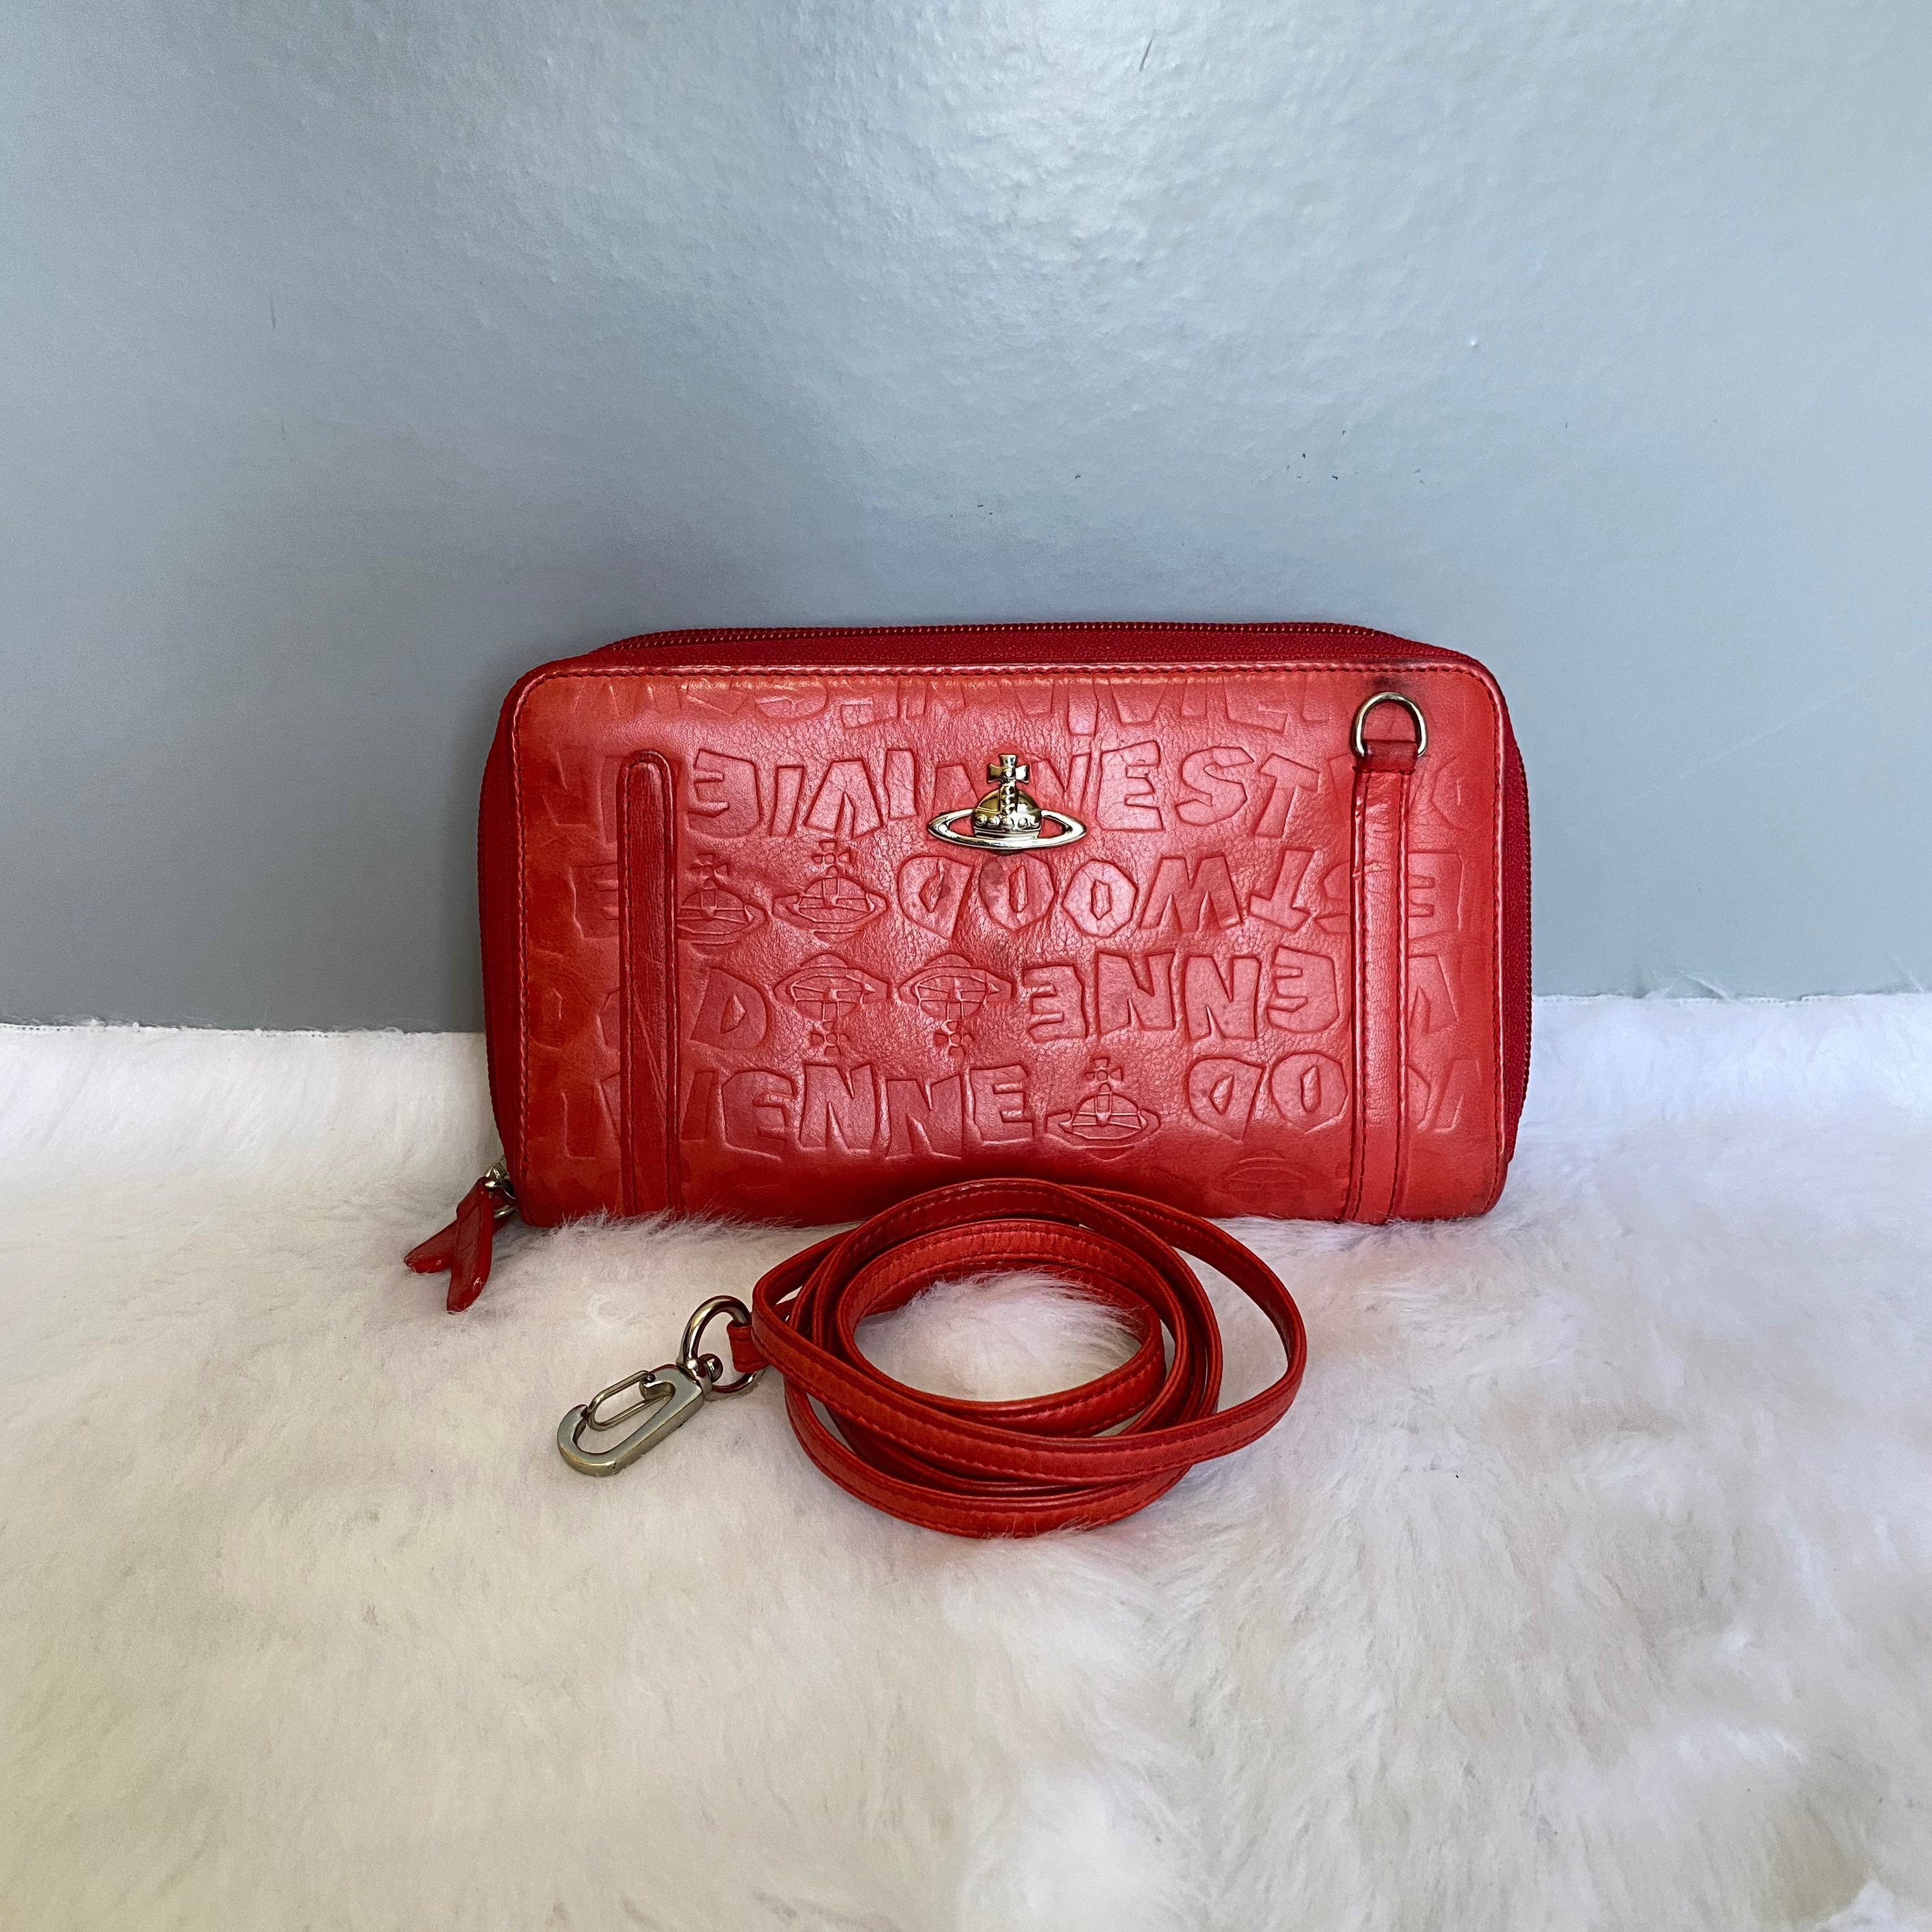 Genuine Vivienne Westwood Chancery 5509 Heat Shaped Eco Leather Shoulder Bag  for sale online